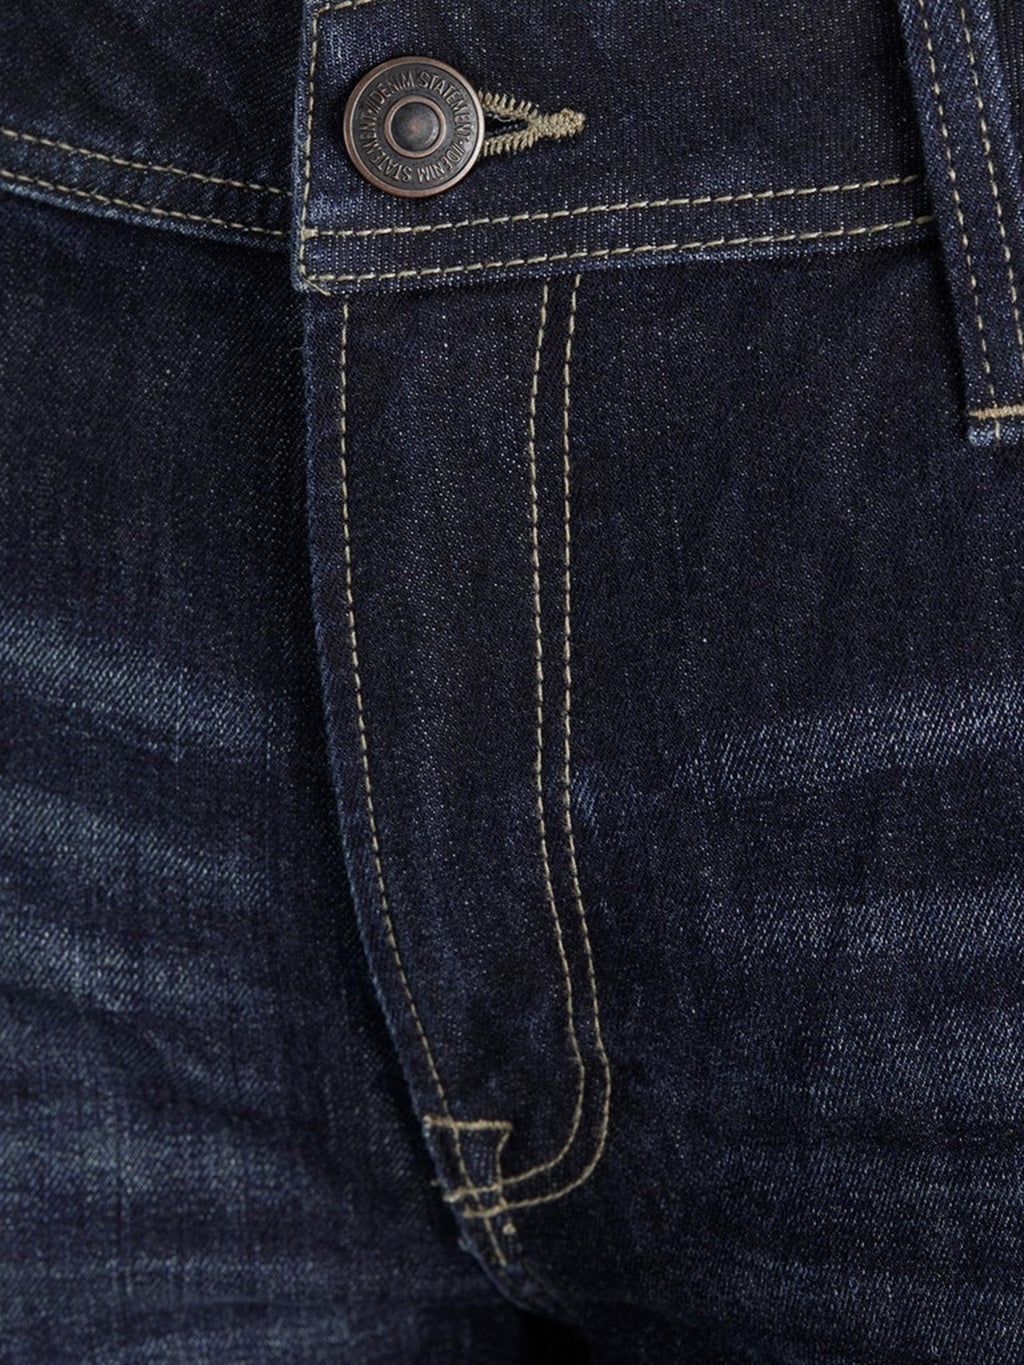 The Original Performance Jeans (schlank) - dunkelblauer Jeans